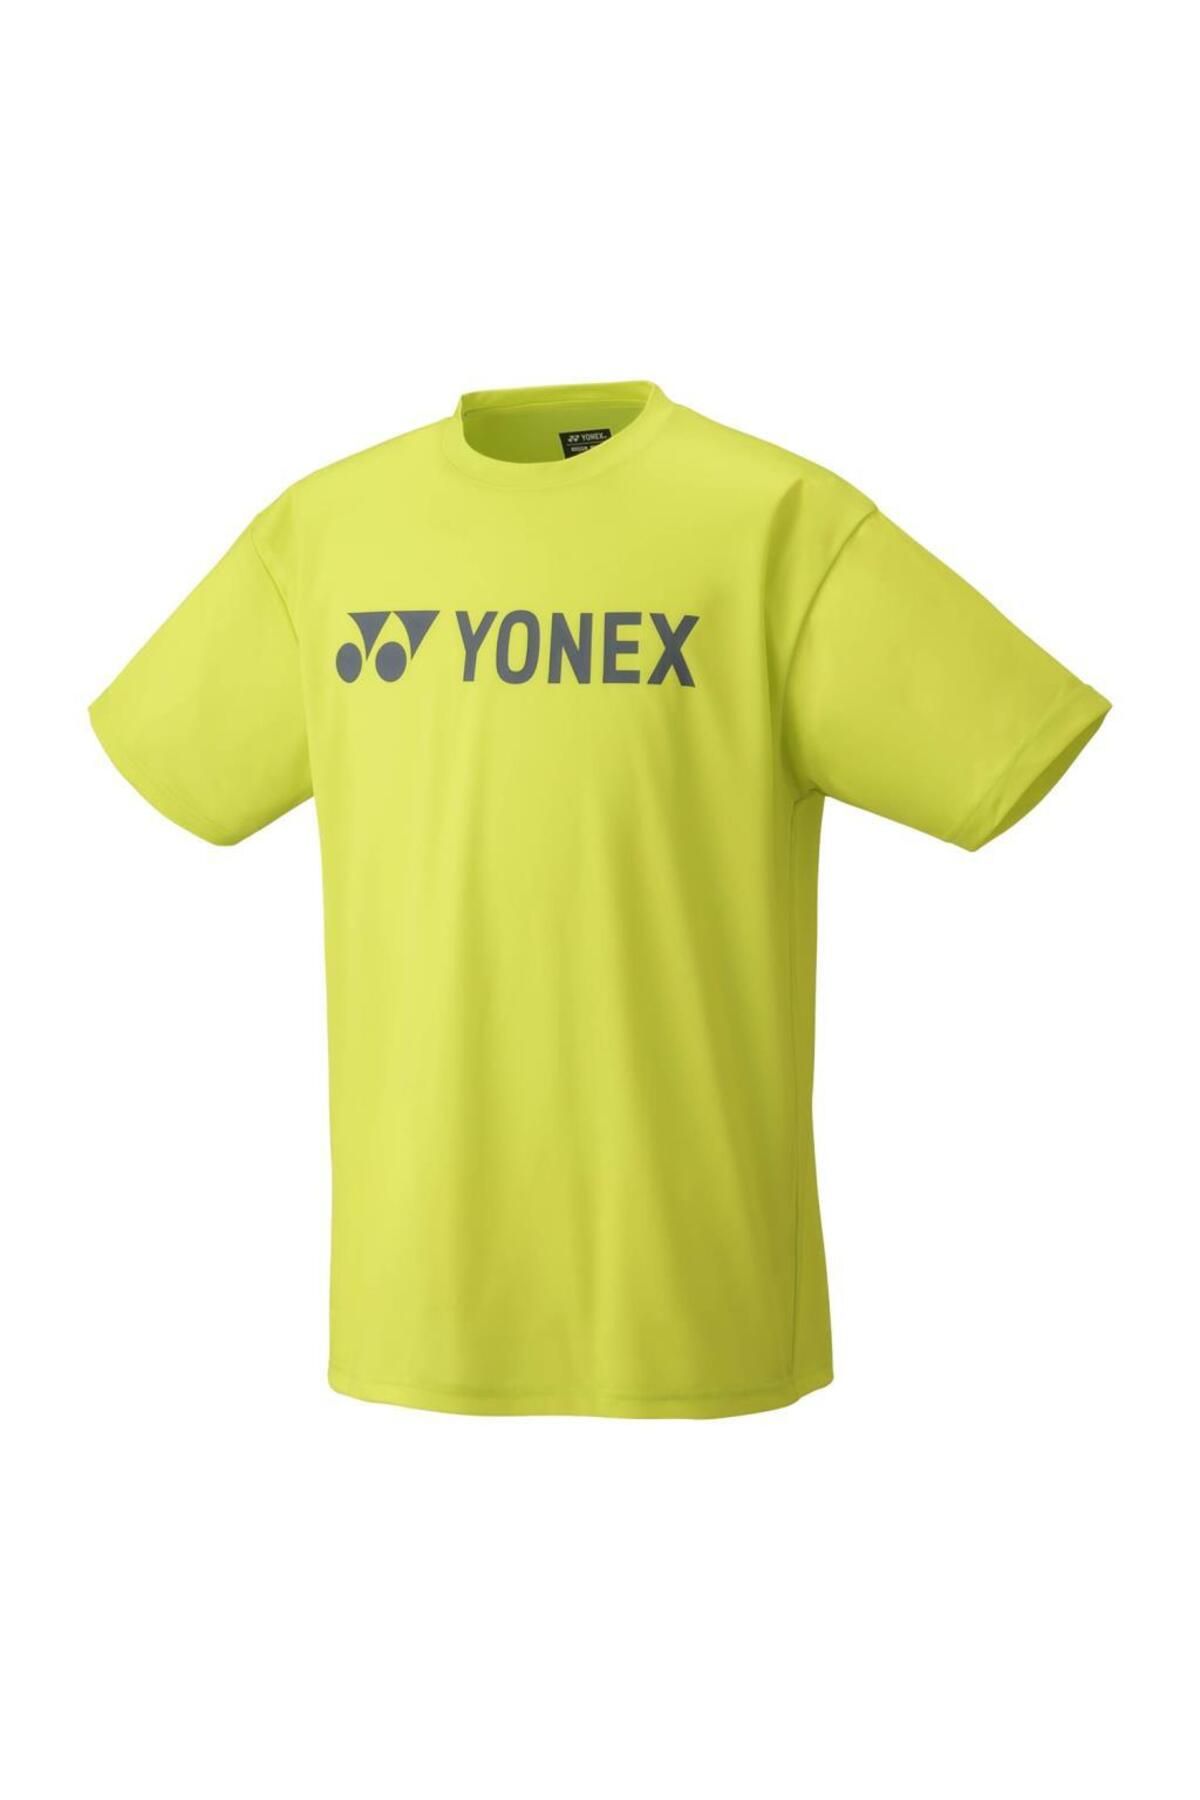 Yonex Tshirt Sarı Erkek YM0046